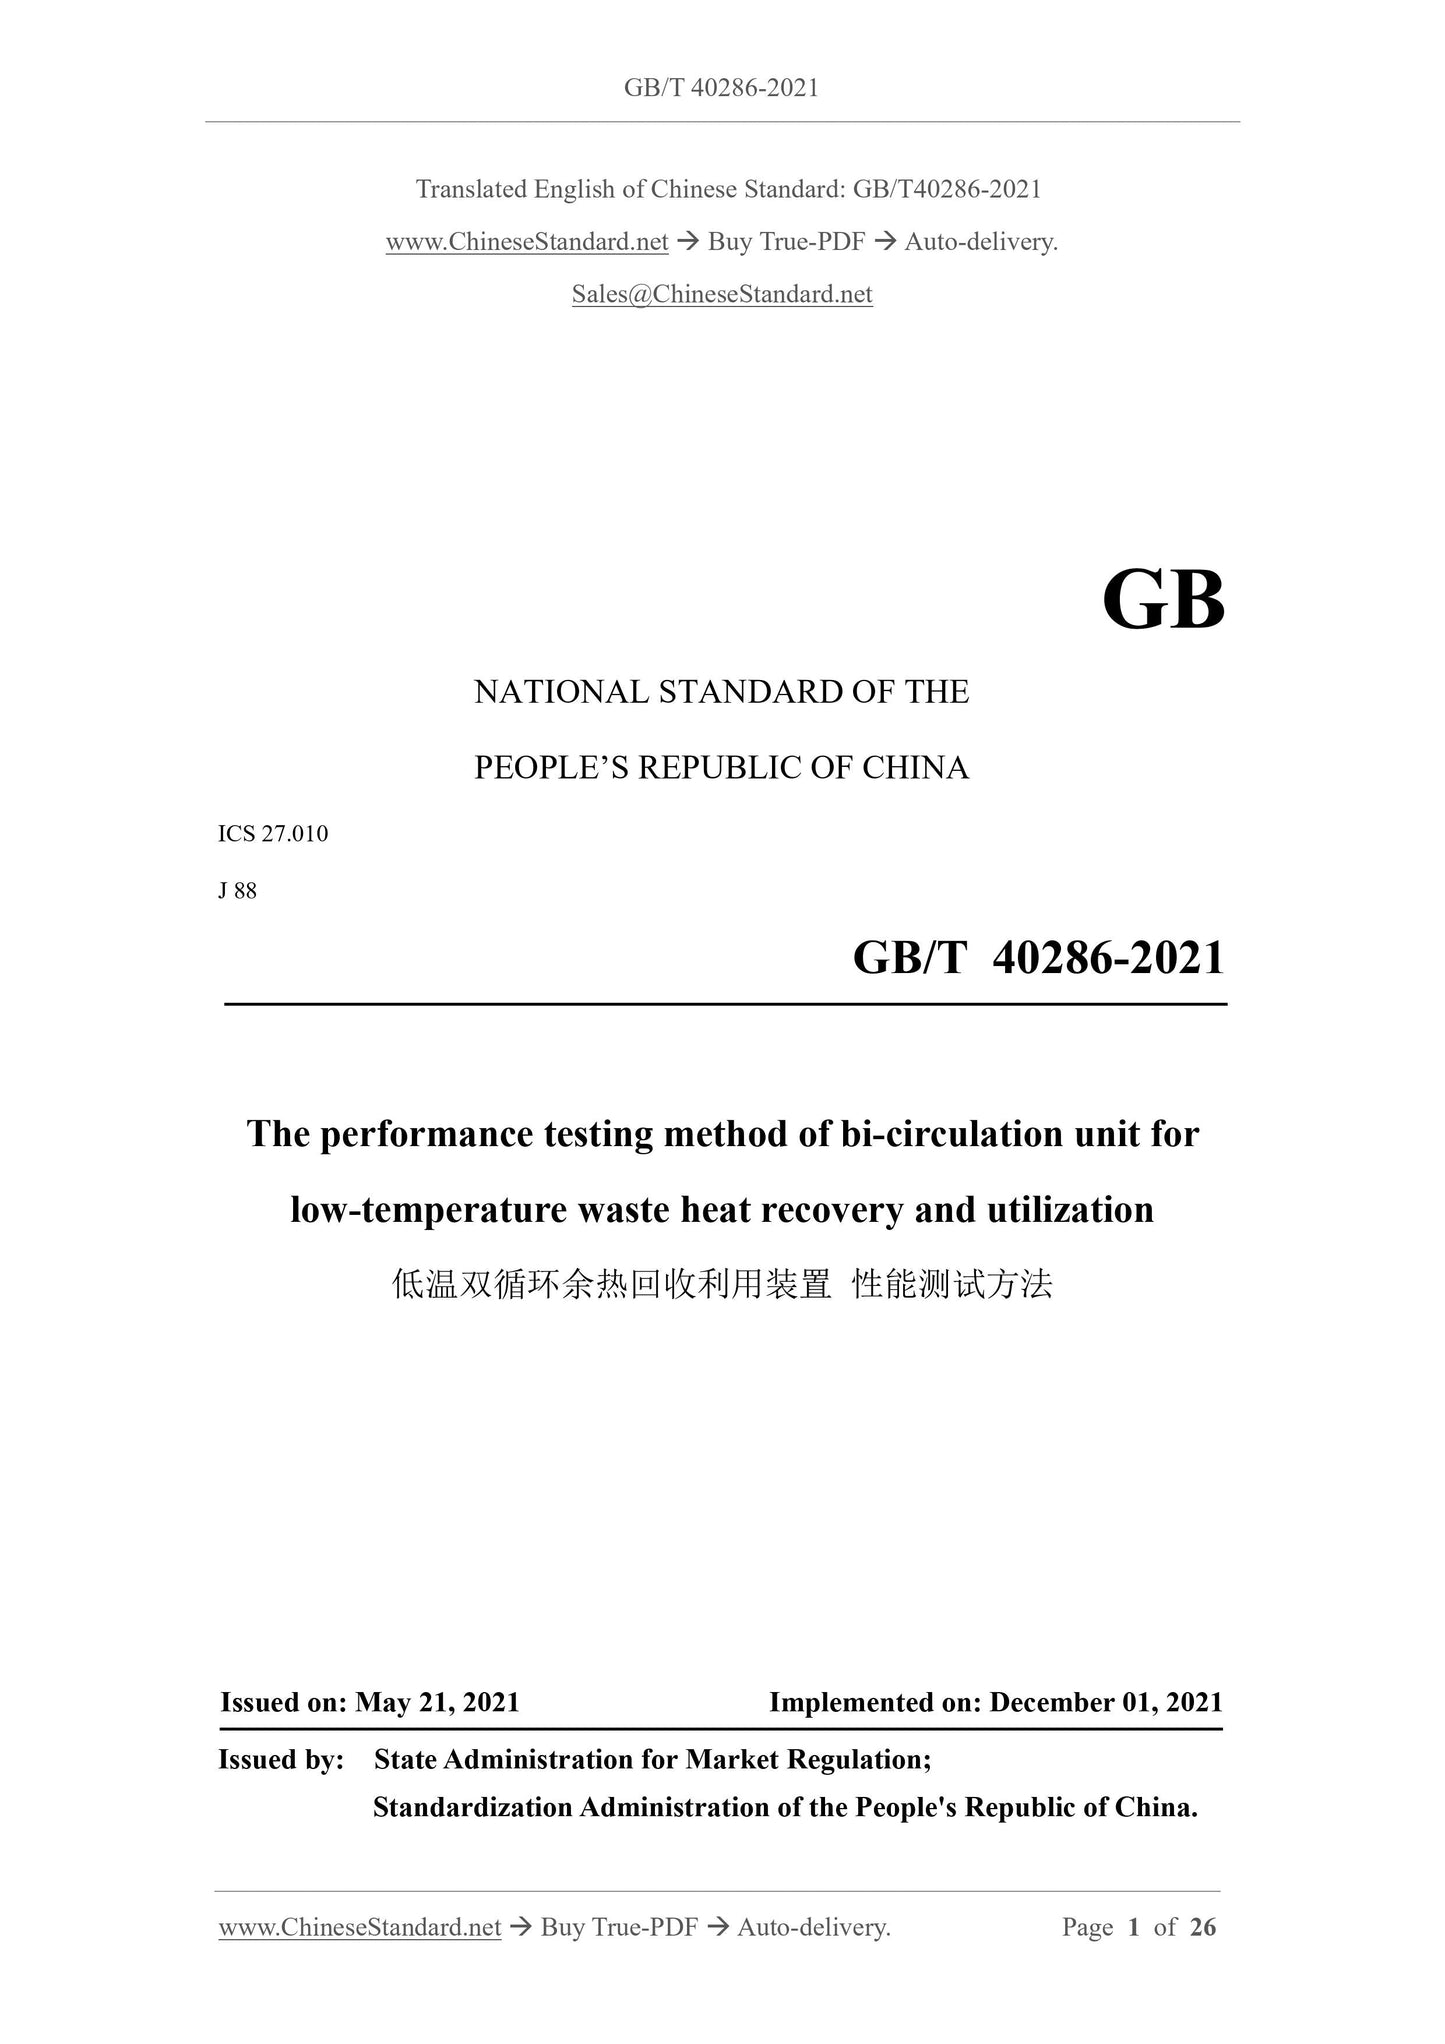 GBT40286-2021 Page 1